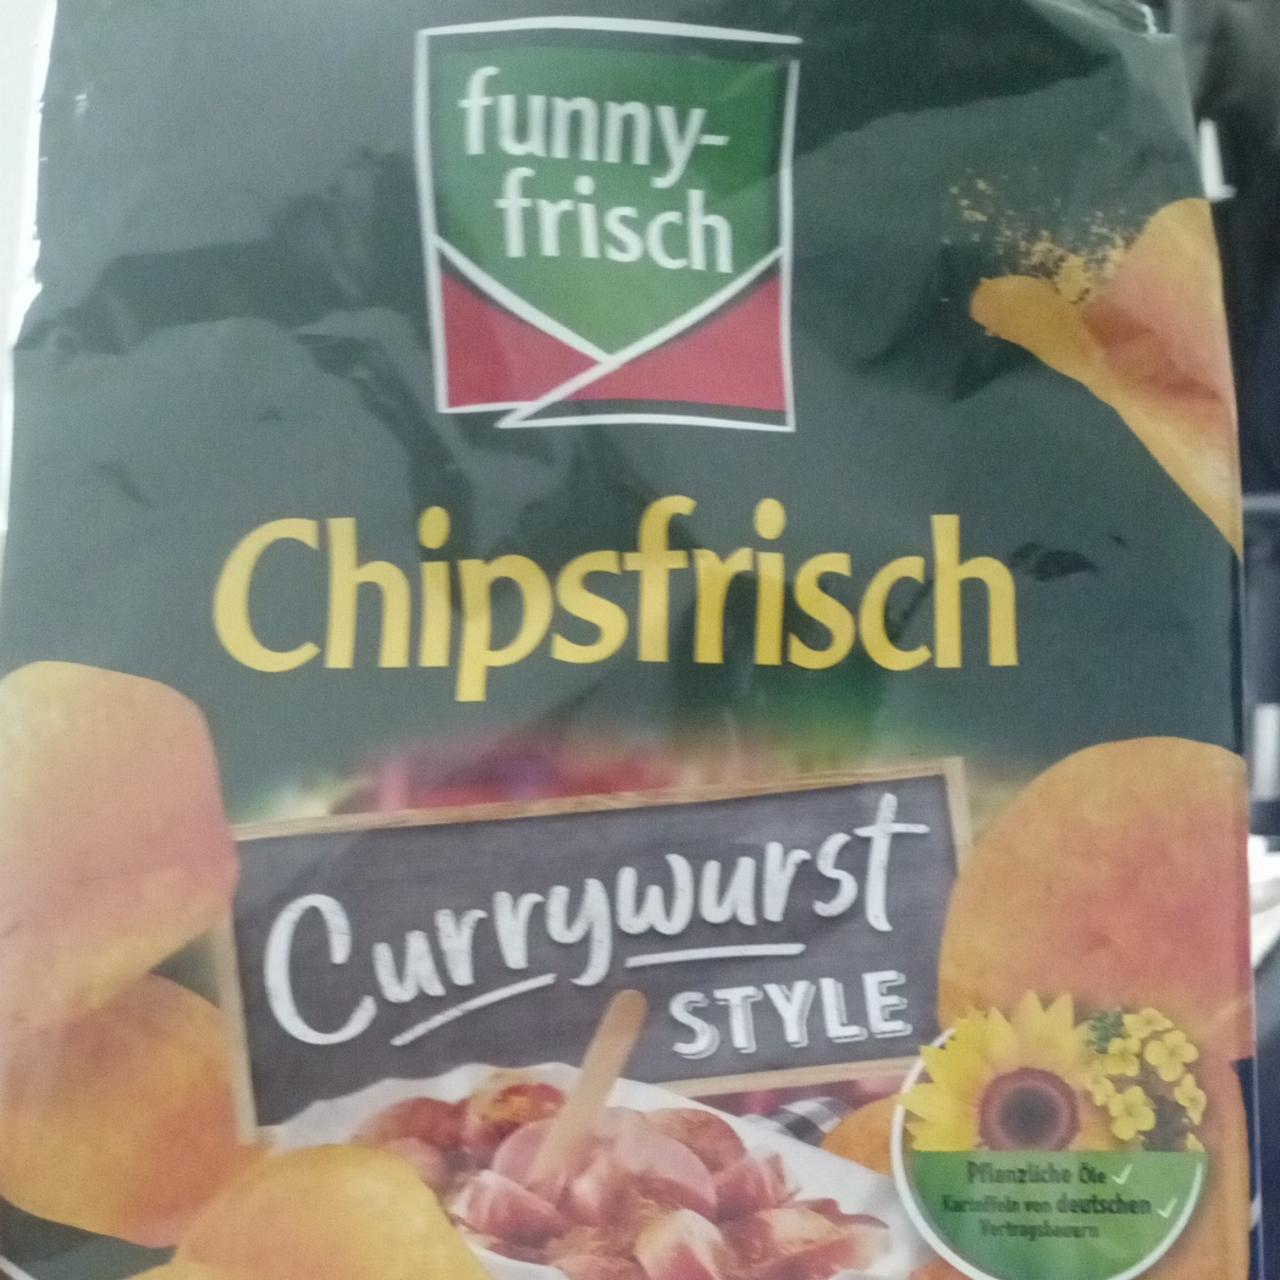 Фото - Chipsfrisch Currywurst style Funny-Frisch